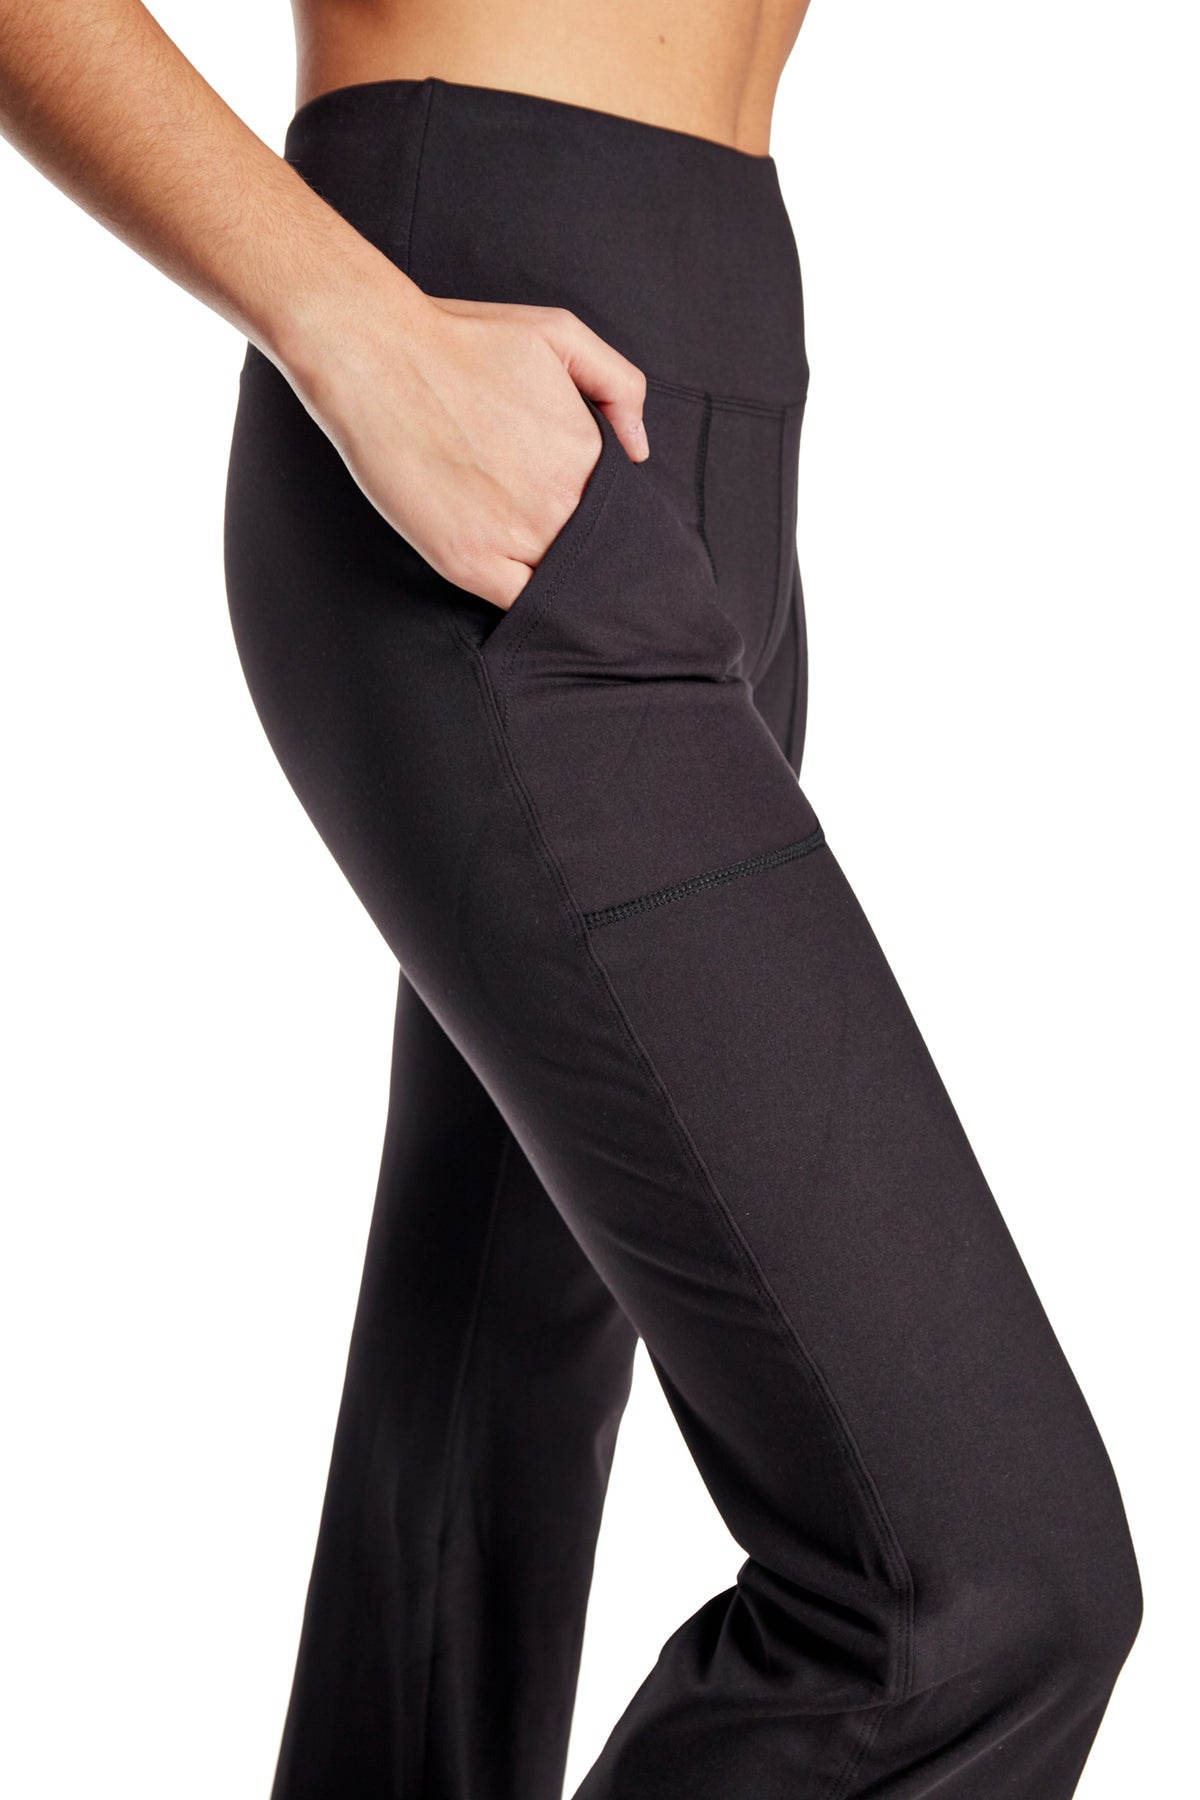 YWDJ Yoga Pants Women High Waist Women Flare Pants High Waisted Workout  Leggings Stretch Non-See Through Tummy Control Bootcut Yoga Pants Gray XS 